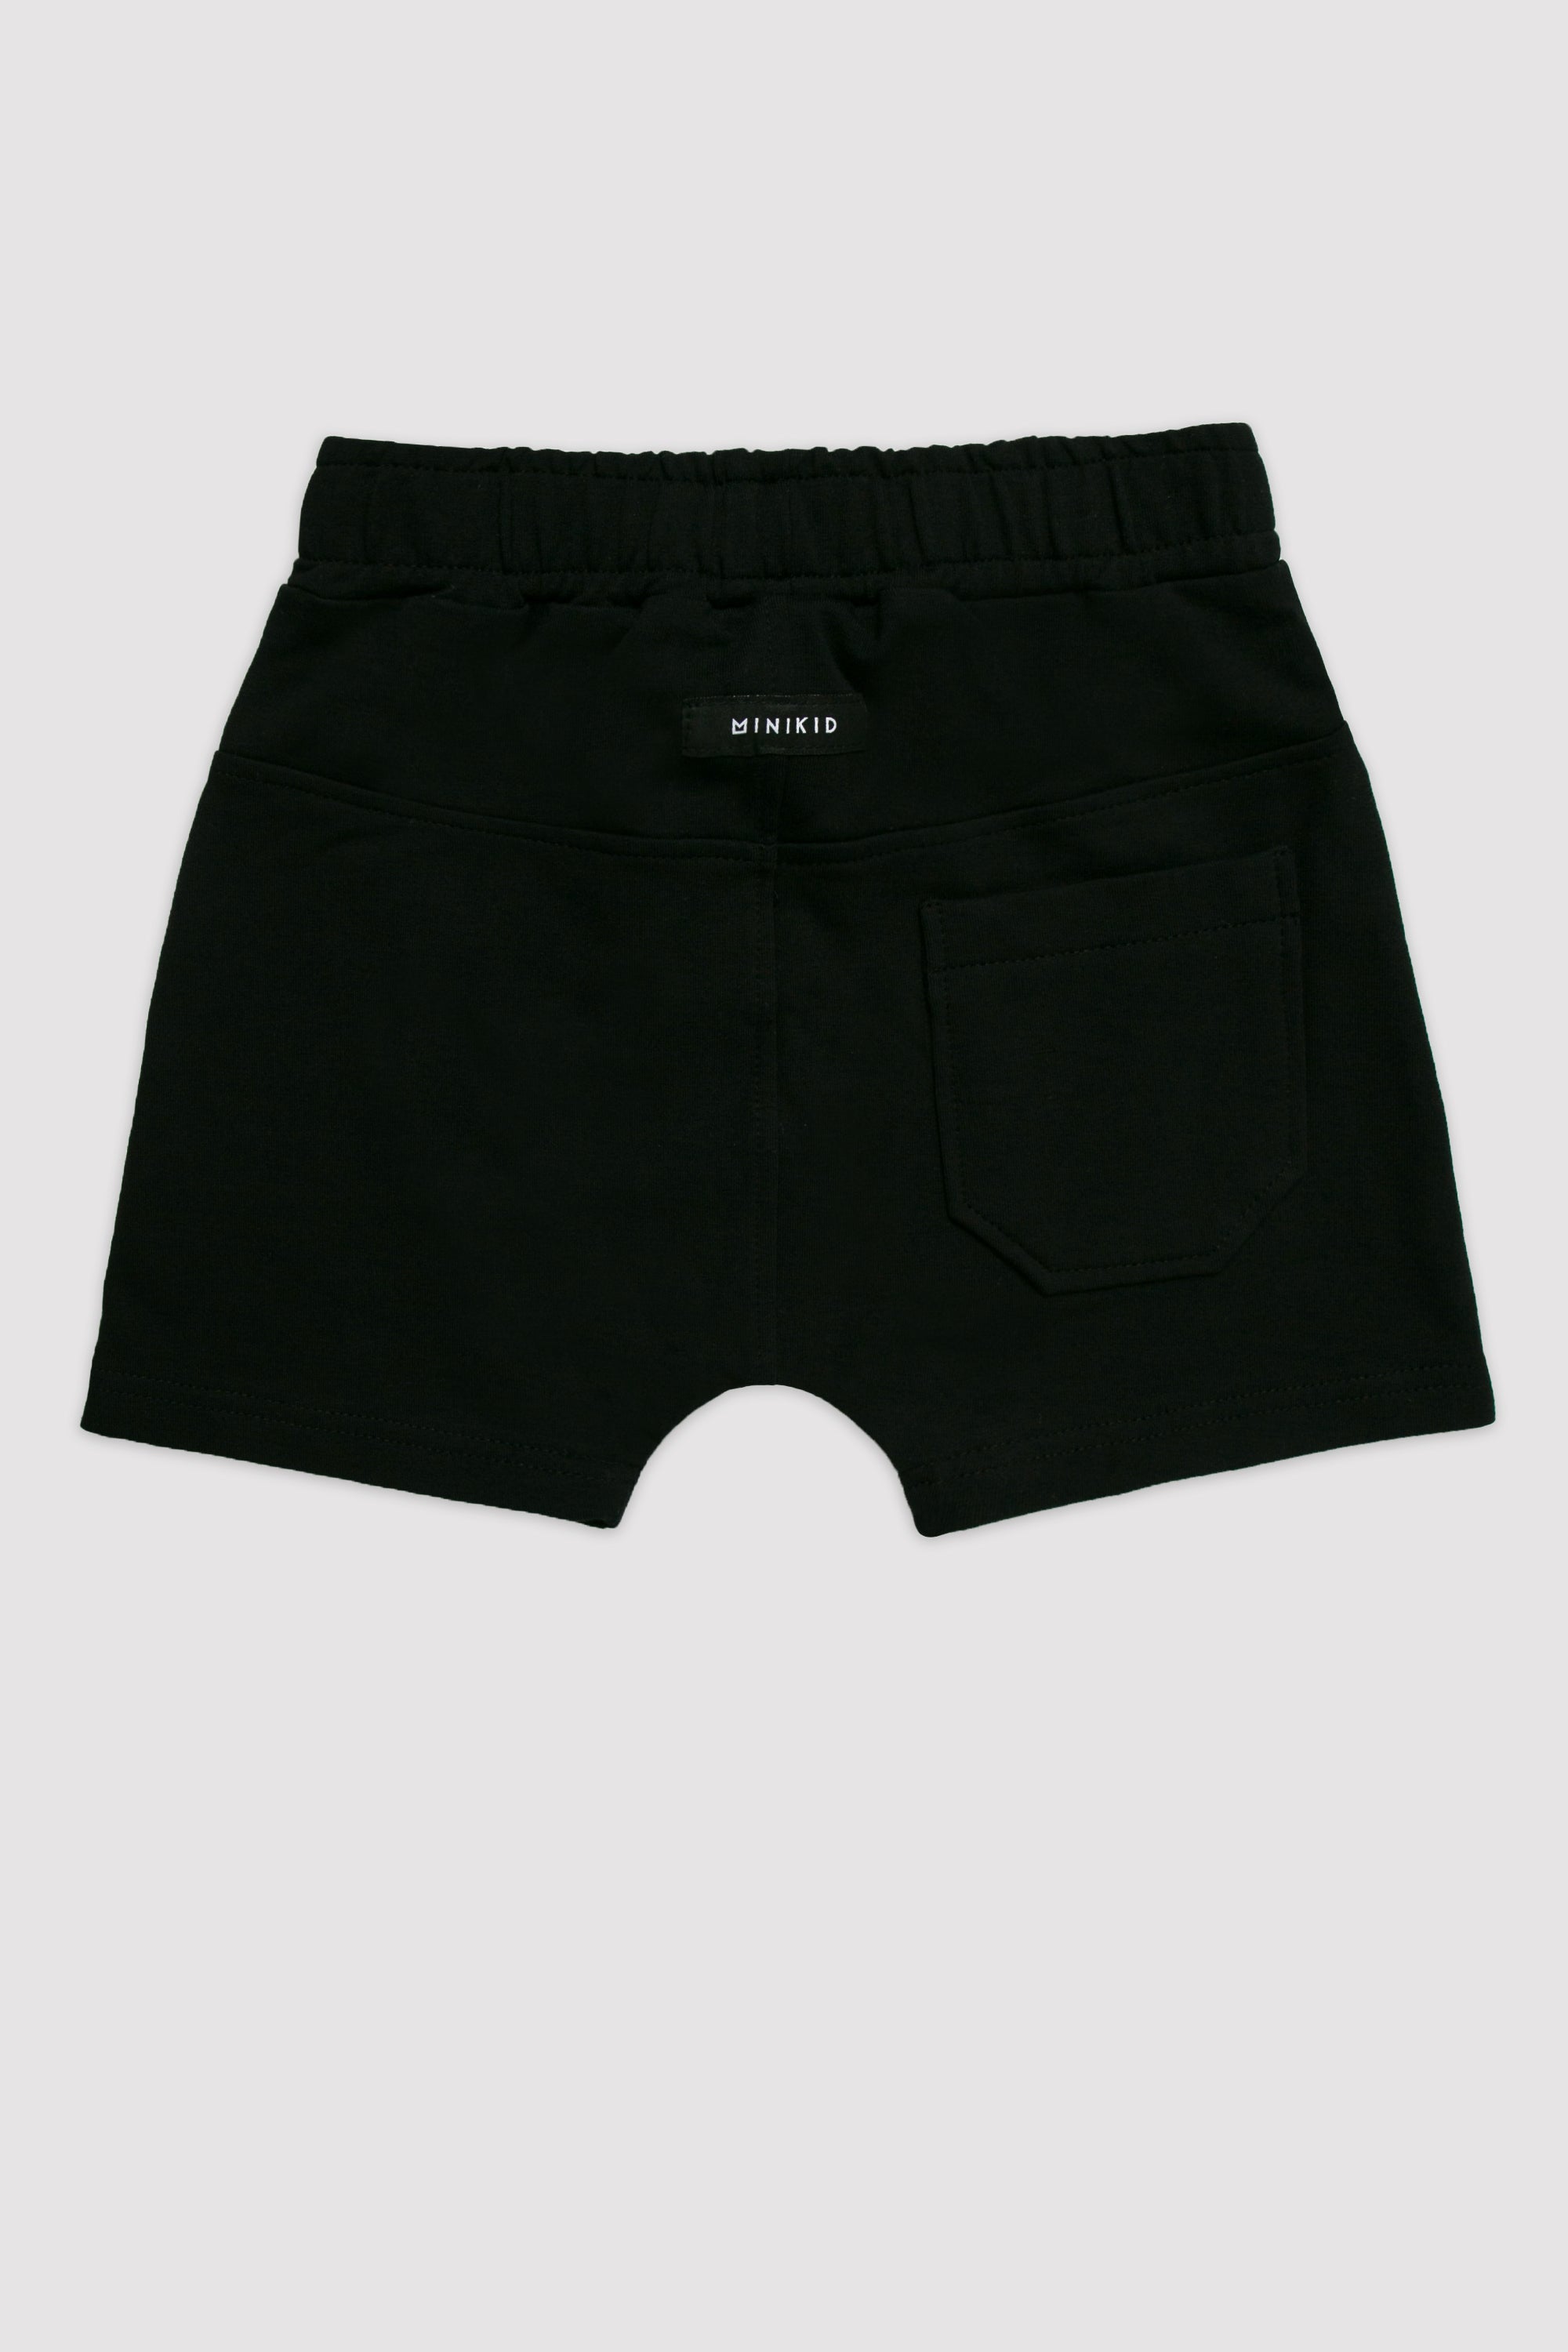 Minikid -Black Shorts